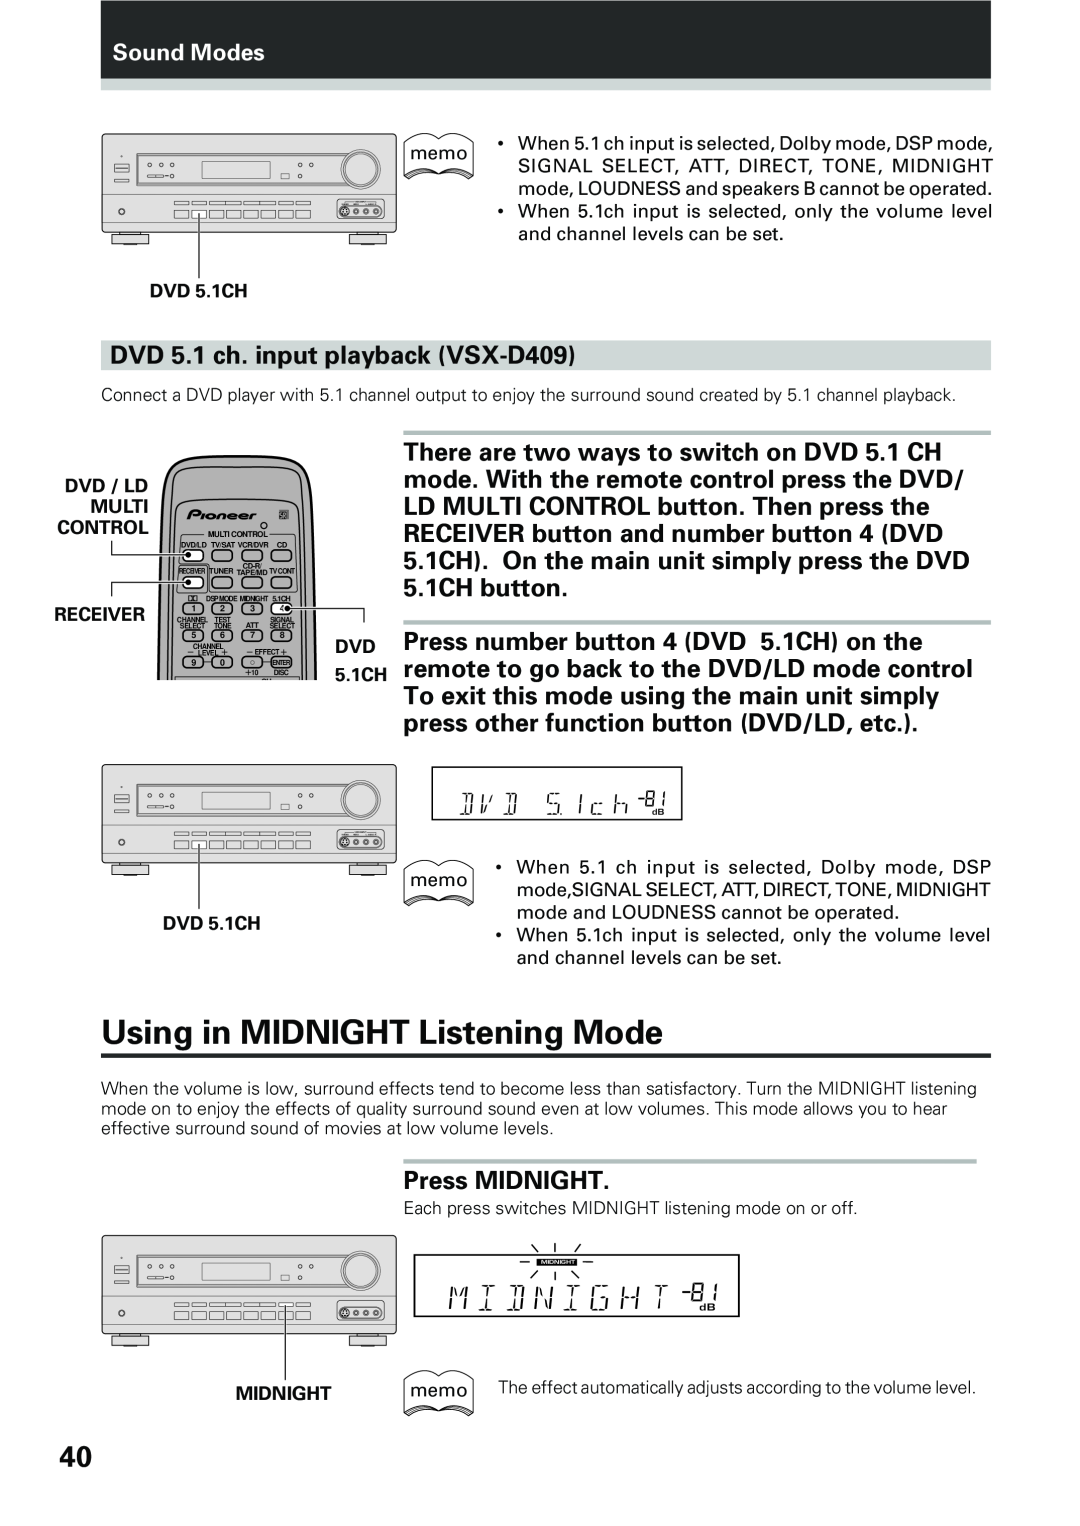 Pioneer VSX-D509S manual Using in MIDNIGHT Listening Mode, DVD 5.1 ch. input playback VSX-D409, Press MIDNIGHT, Sound Modes 